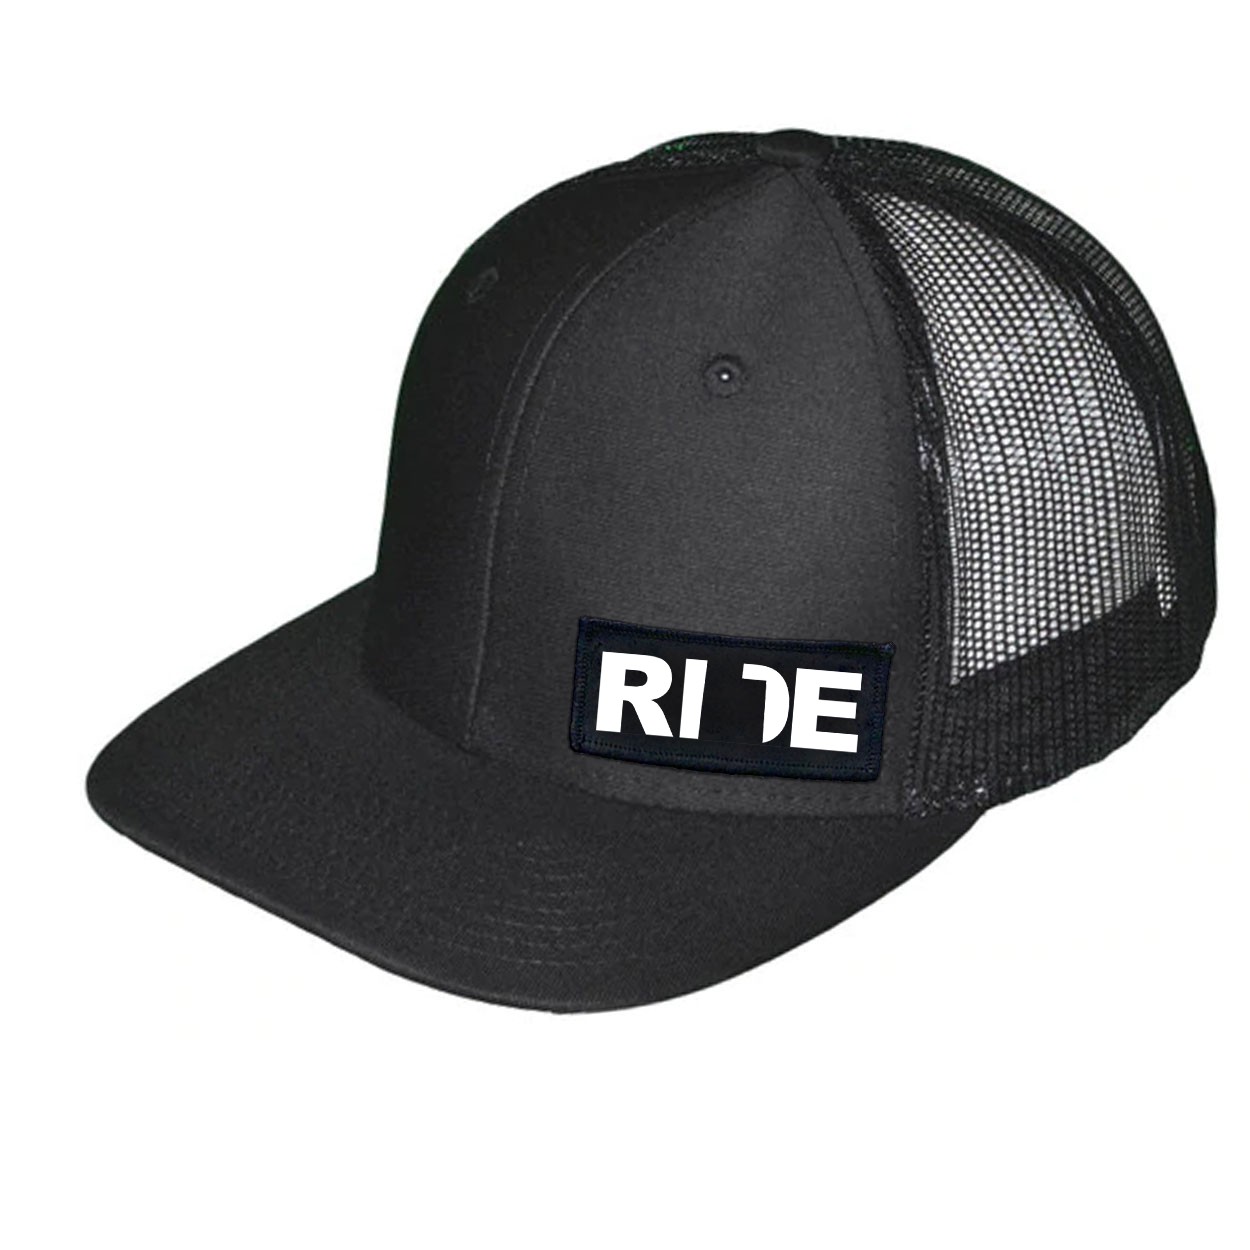 Ride Utah Night Out Woven Patch Snapback Trucker Hat Black (White Logo)